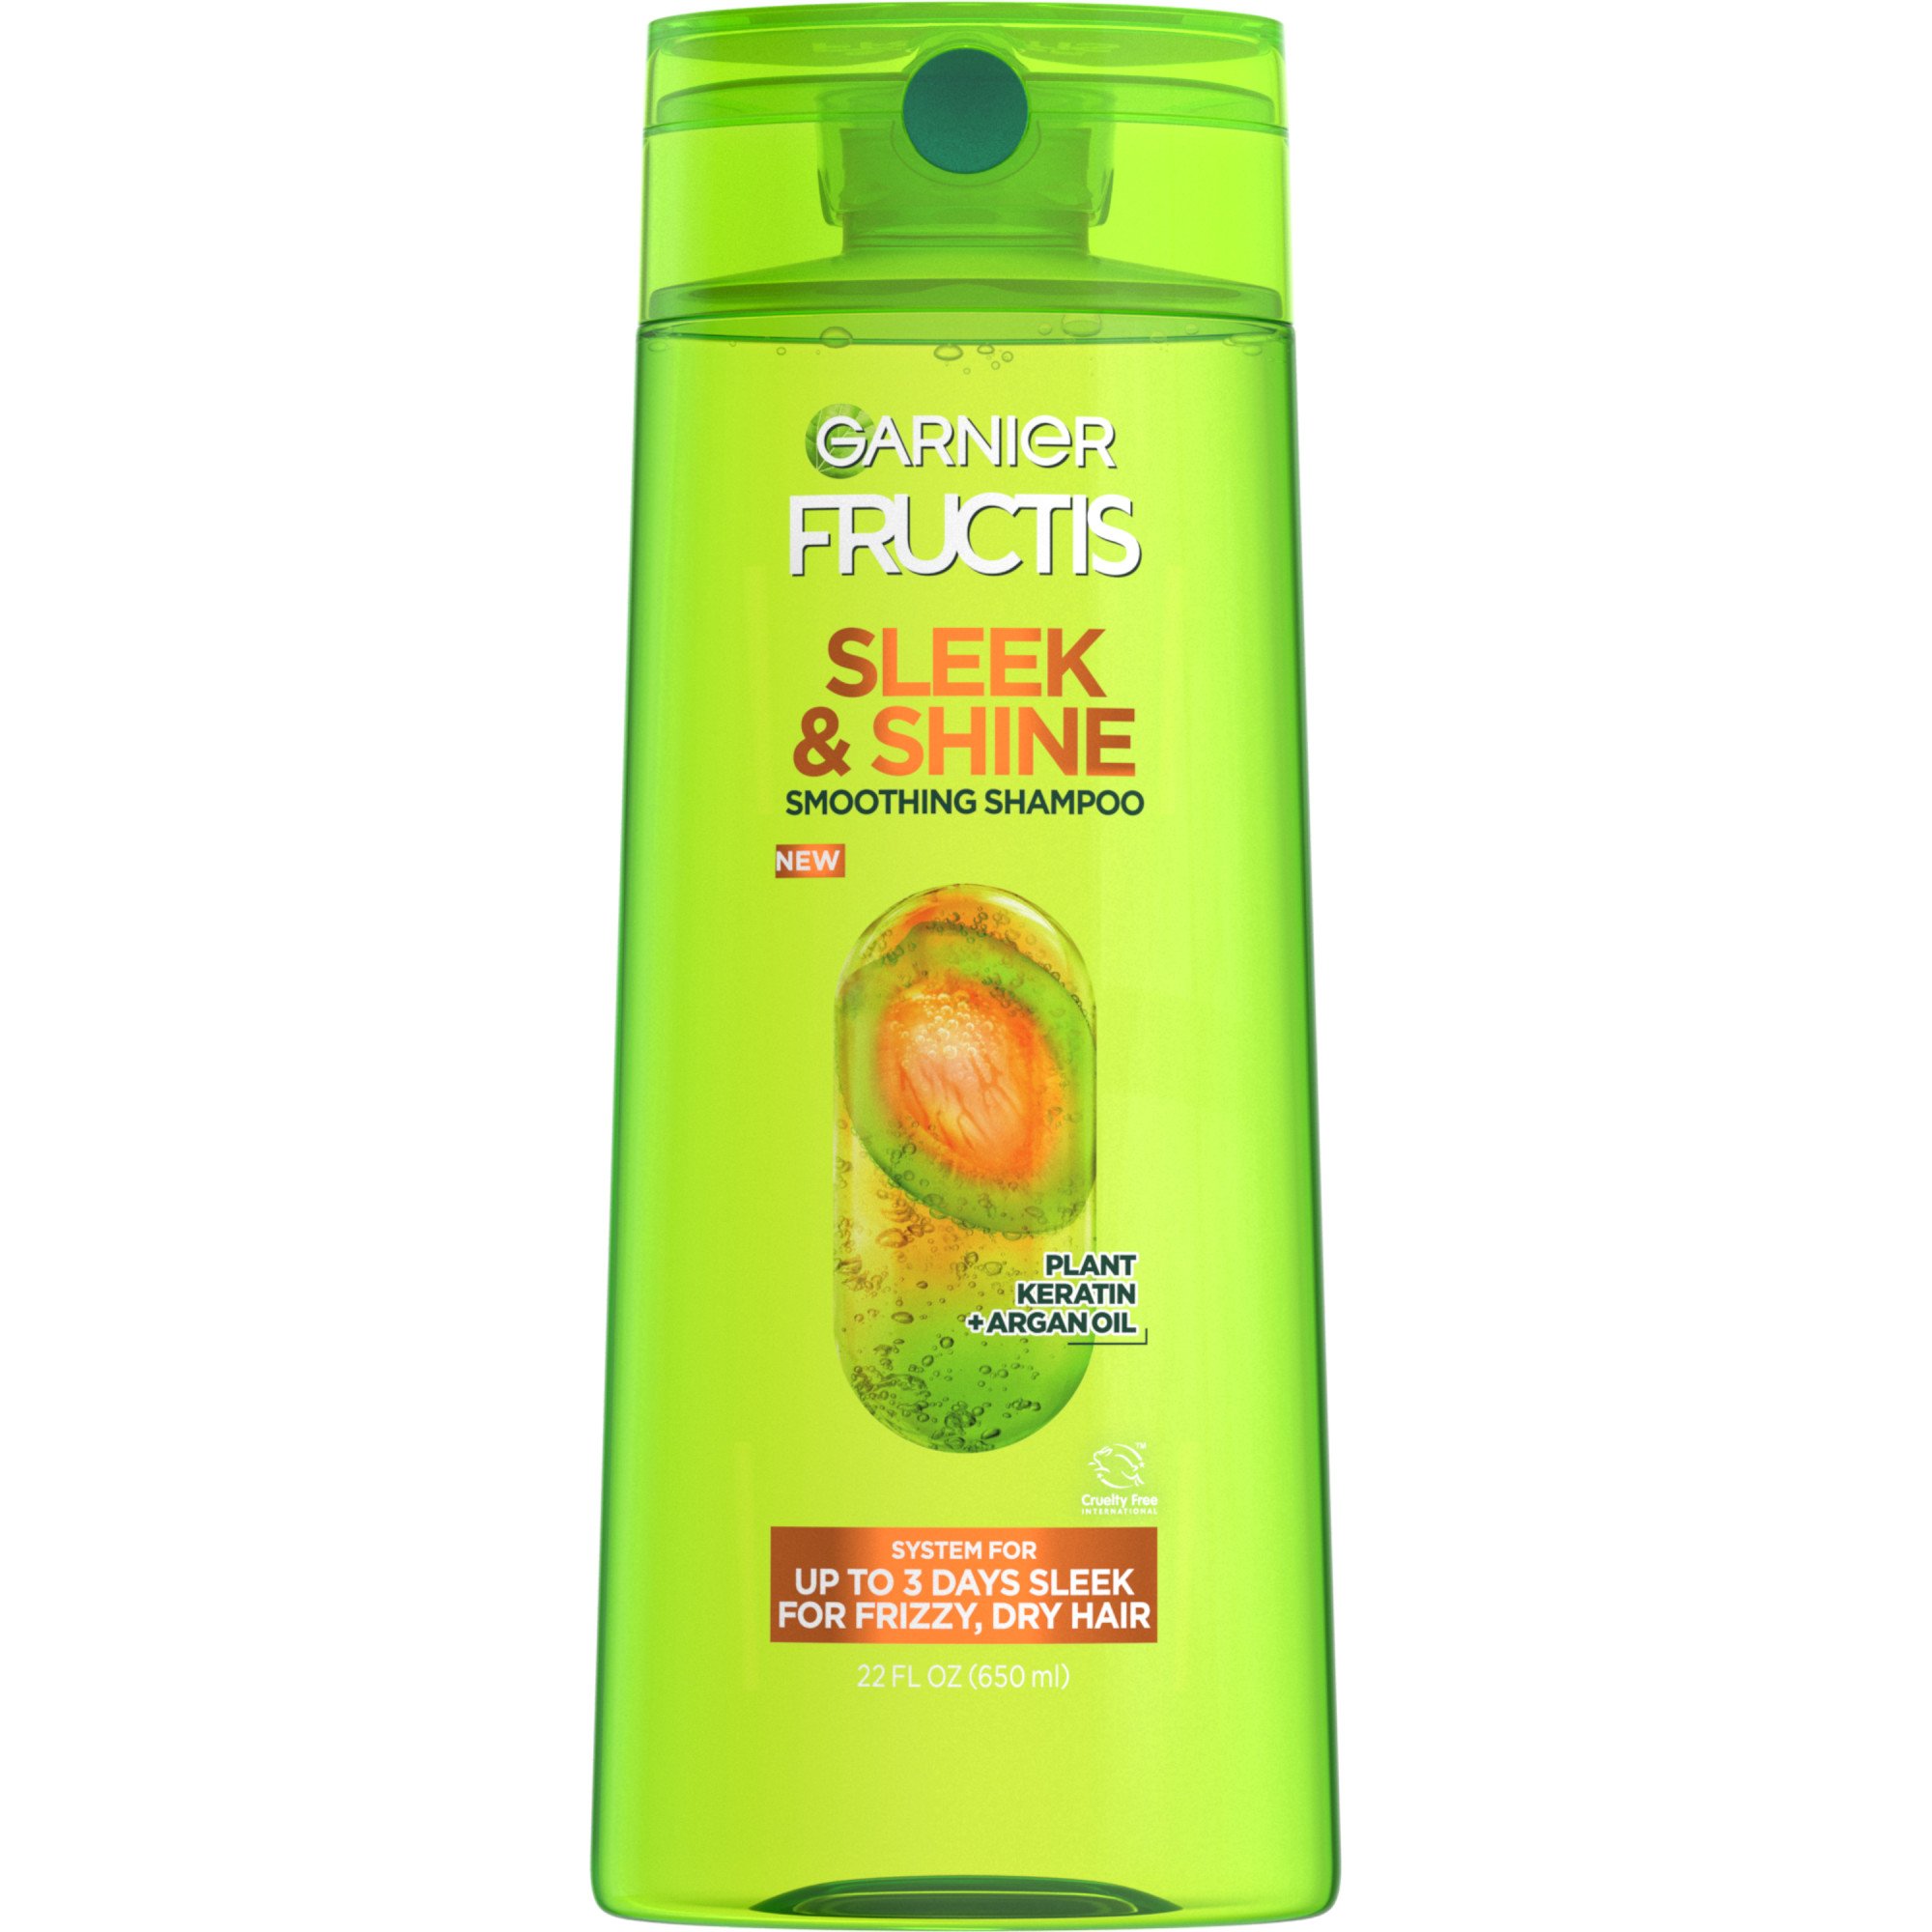 Garnier Fructis Sleek & Shine Smoothing Shampoo for - Shop Hair Care H-E-B